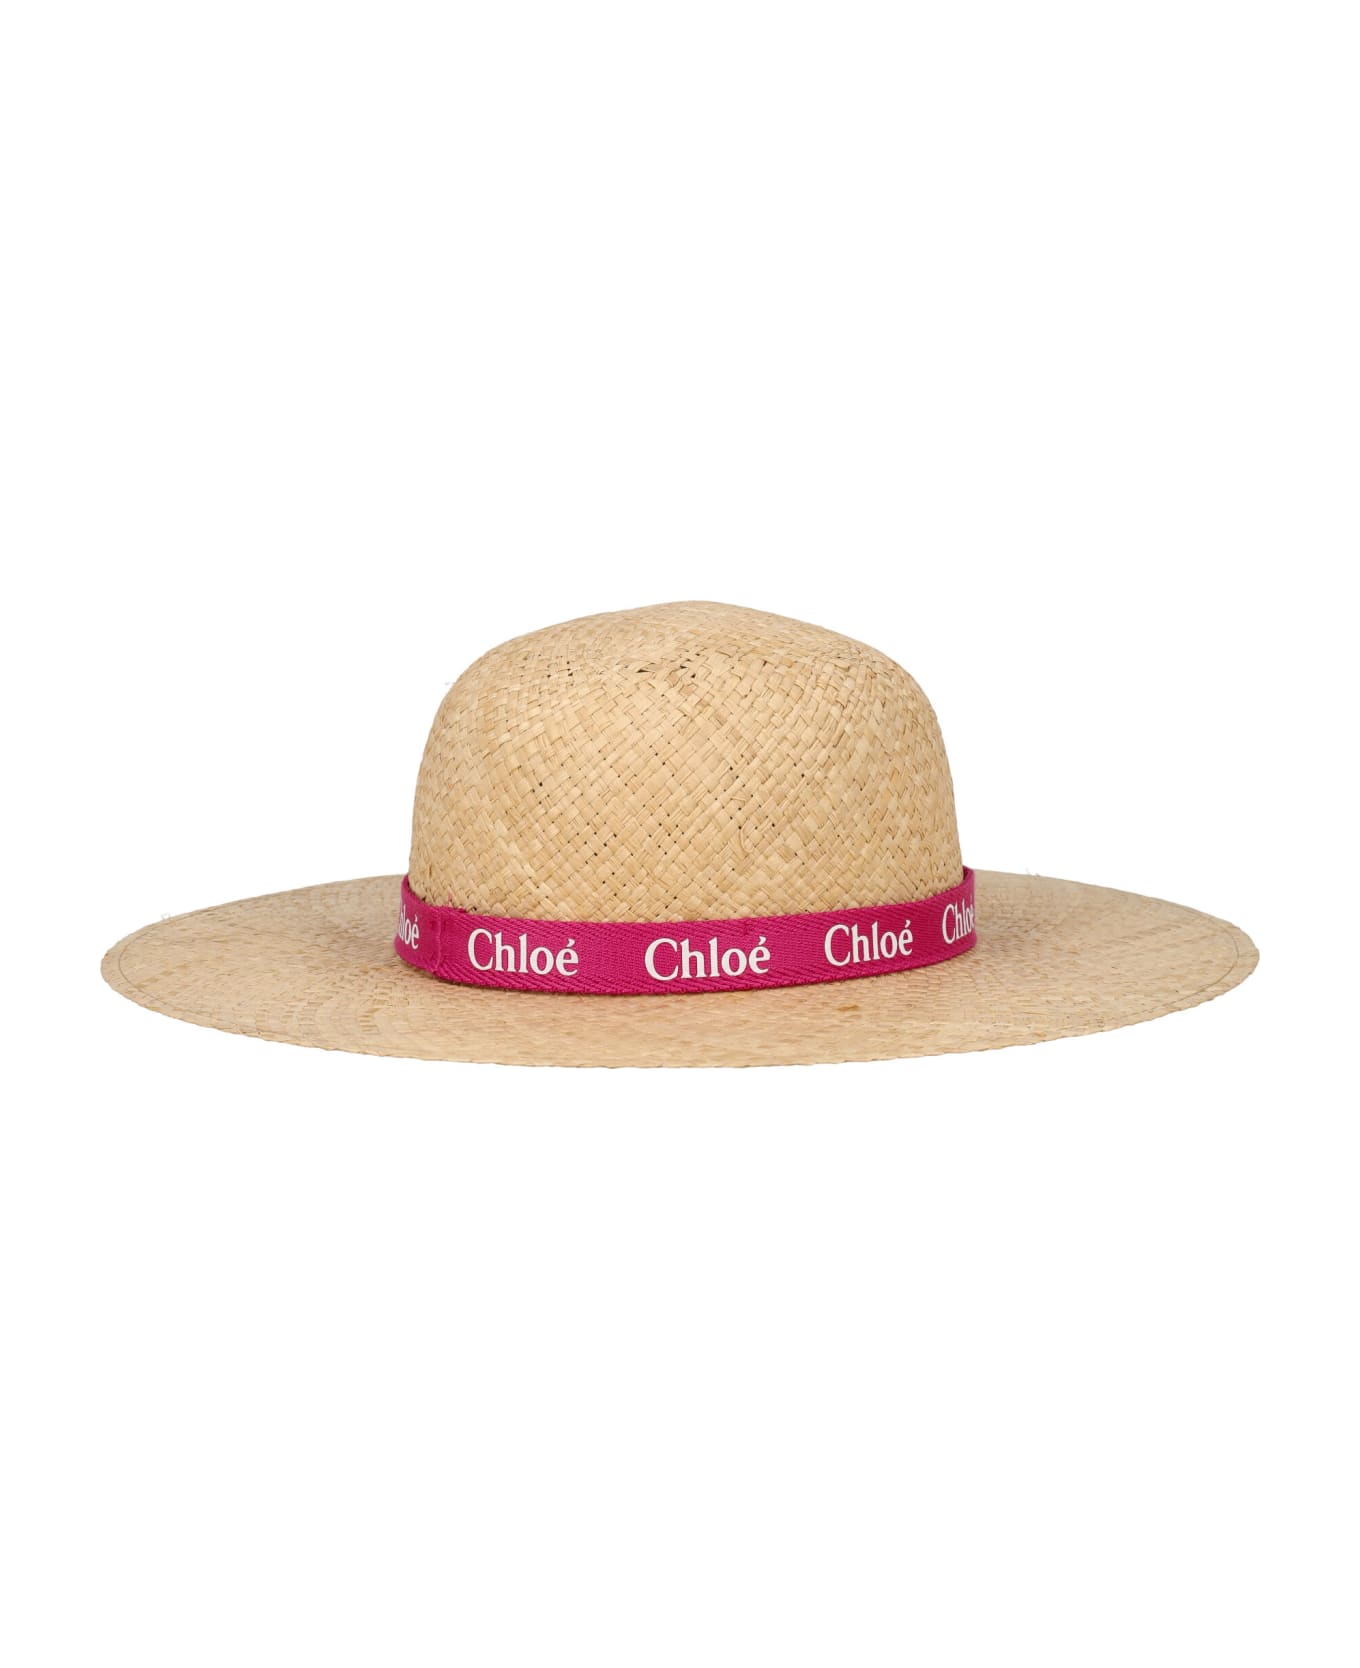 Chloé Raffia Summer Hat - NATURAL PINK